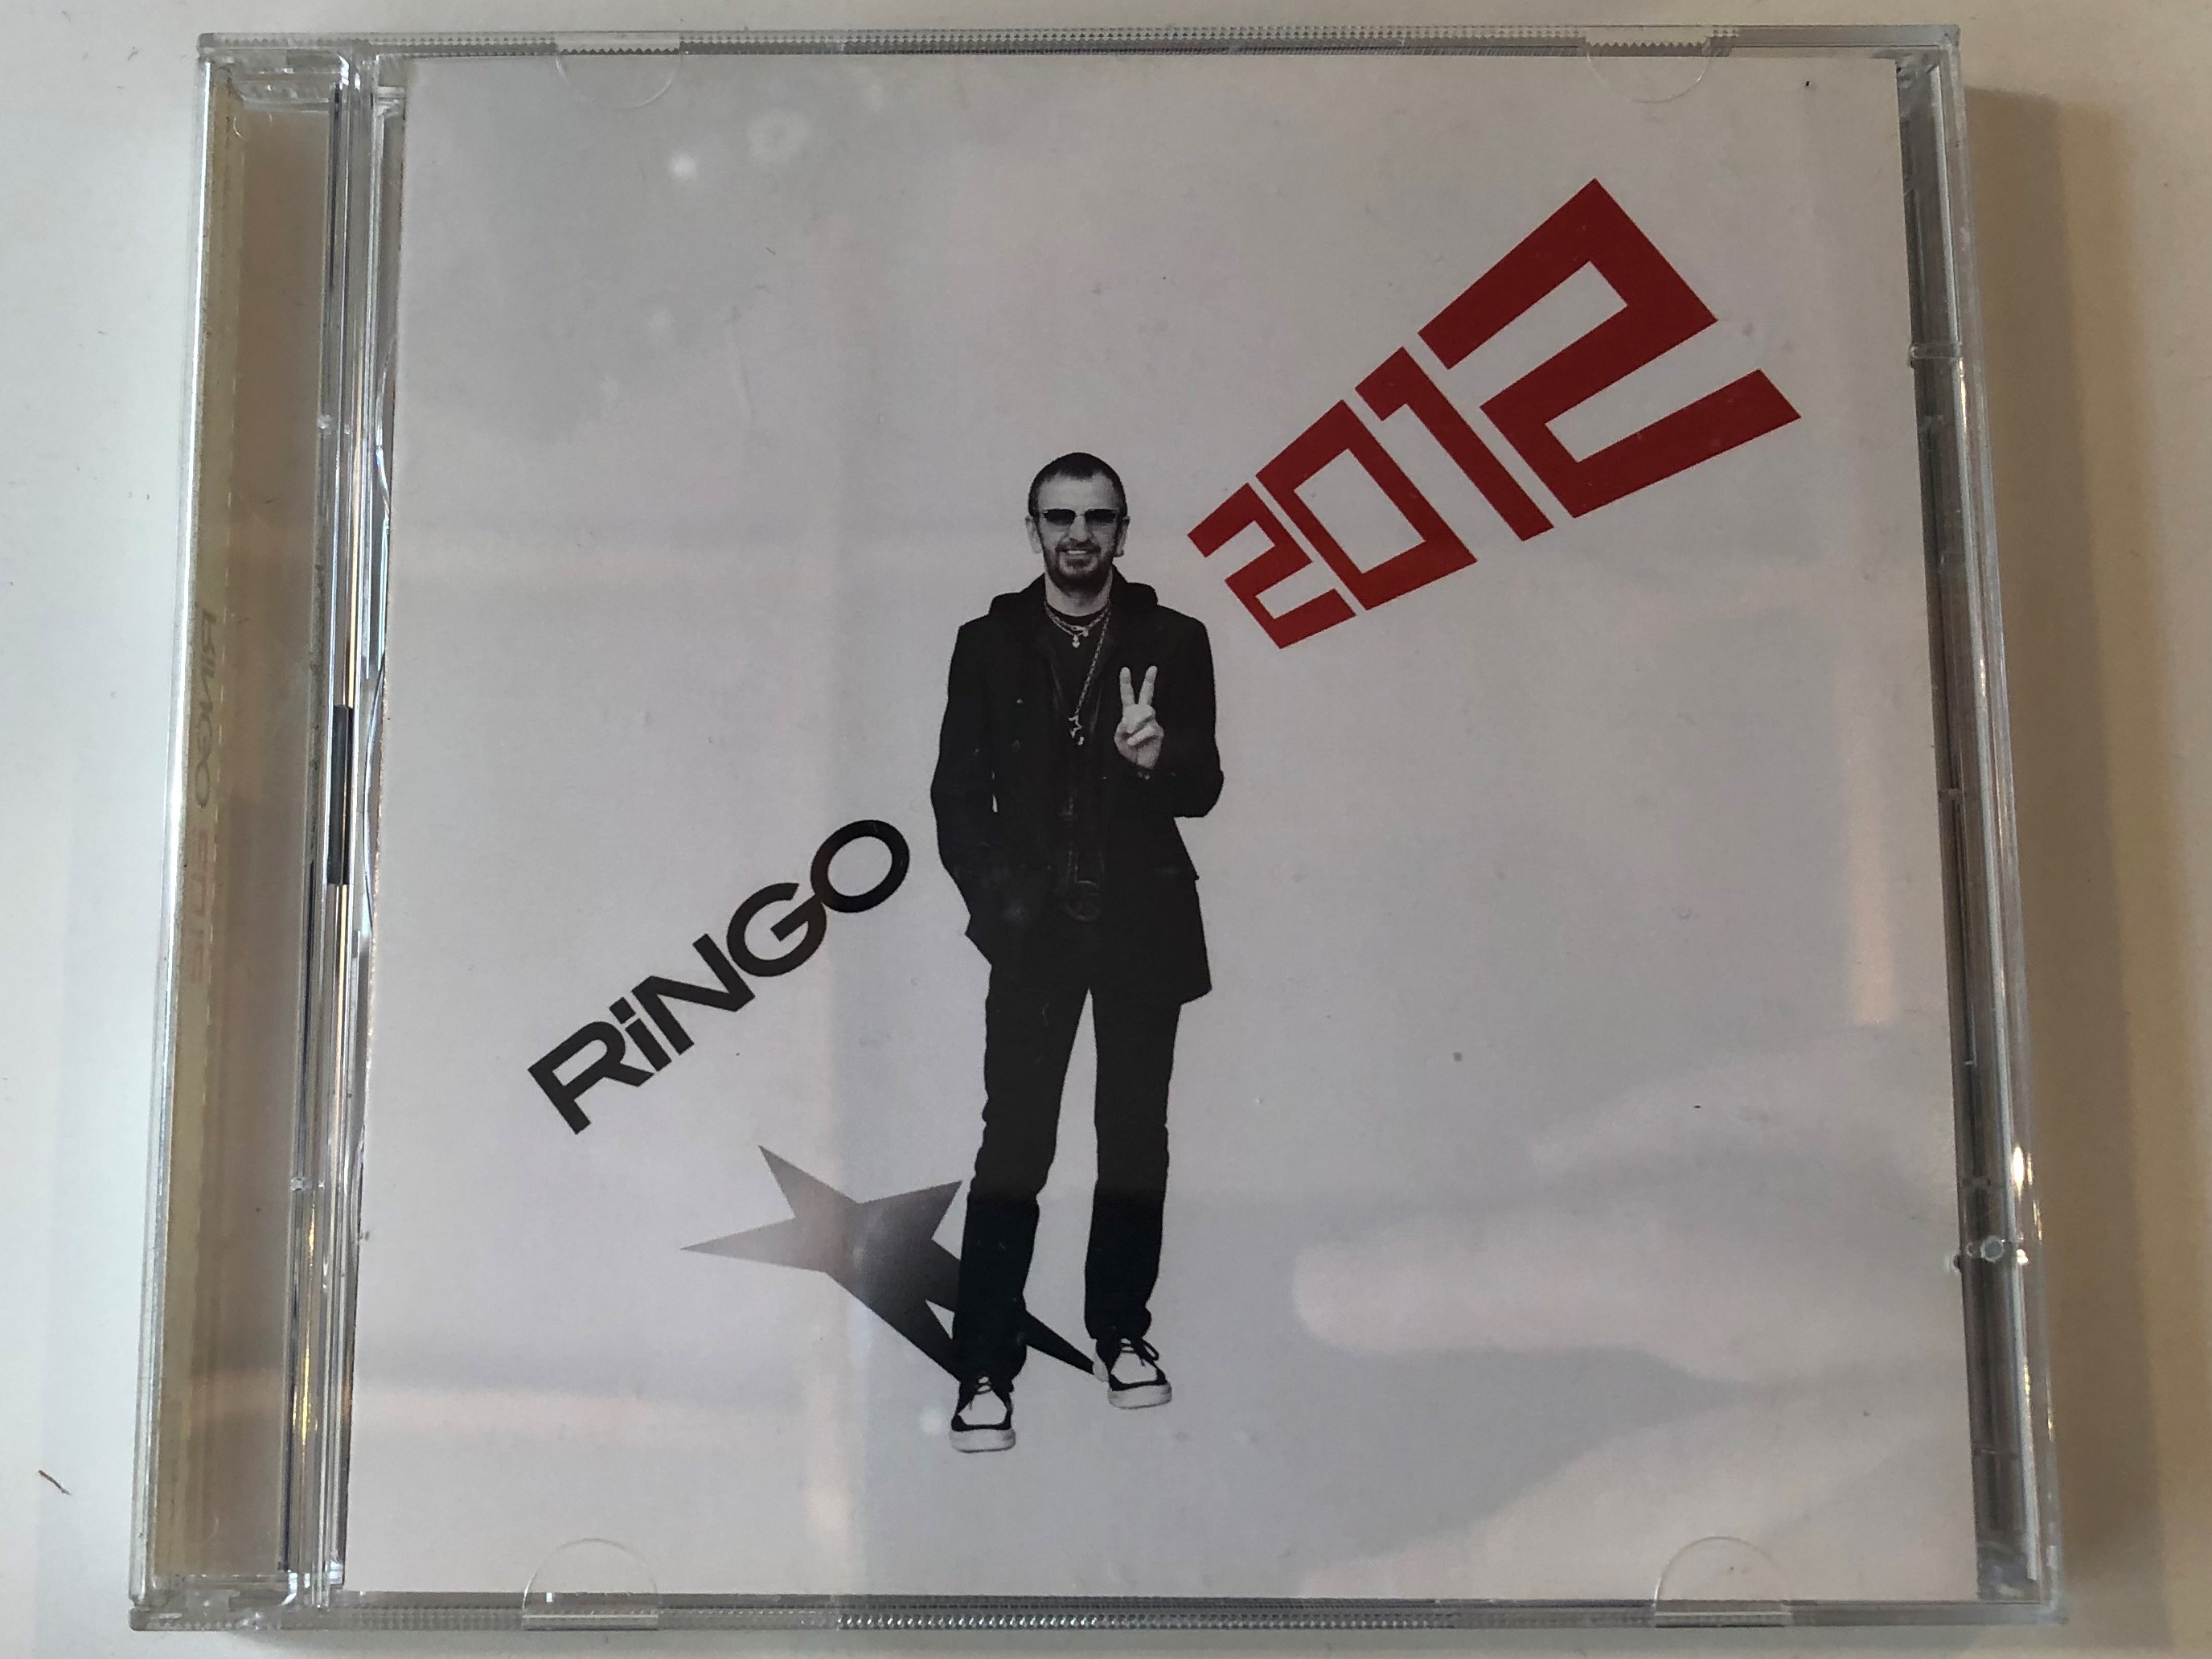 ringo-2012-ume-audio-cd-dvd-2012-0602527937885-1-.jpg